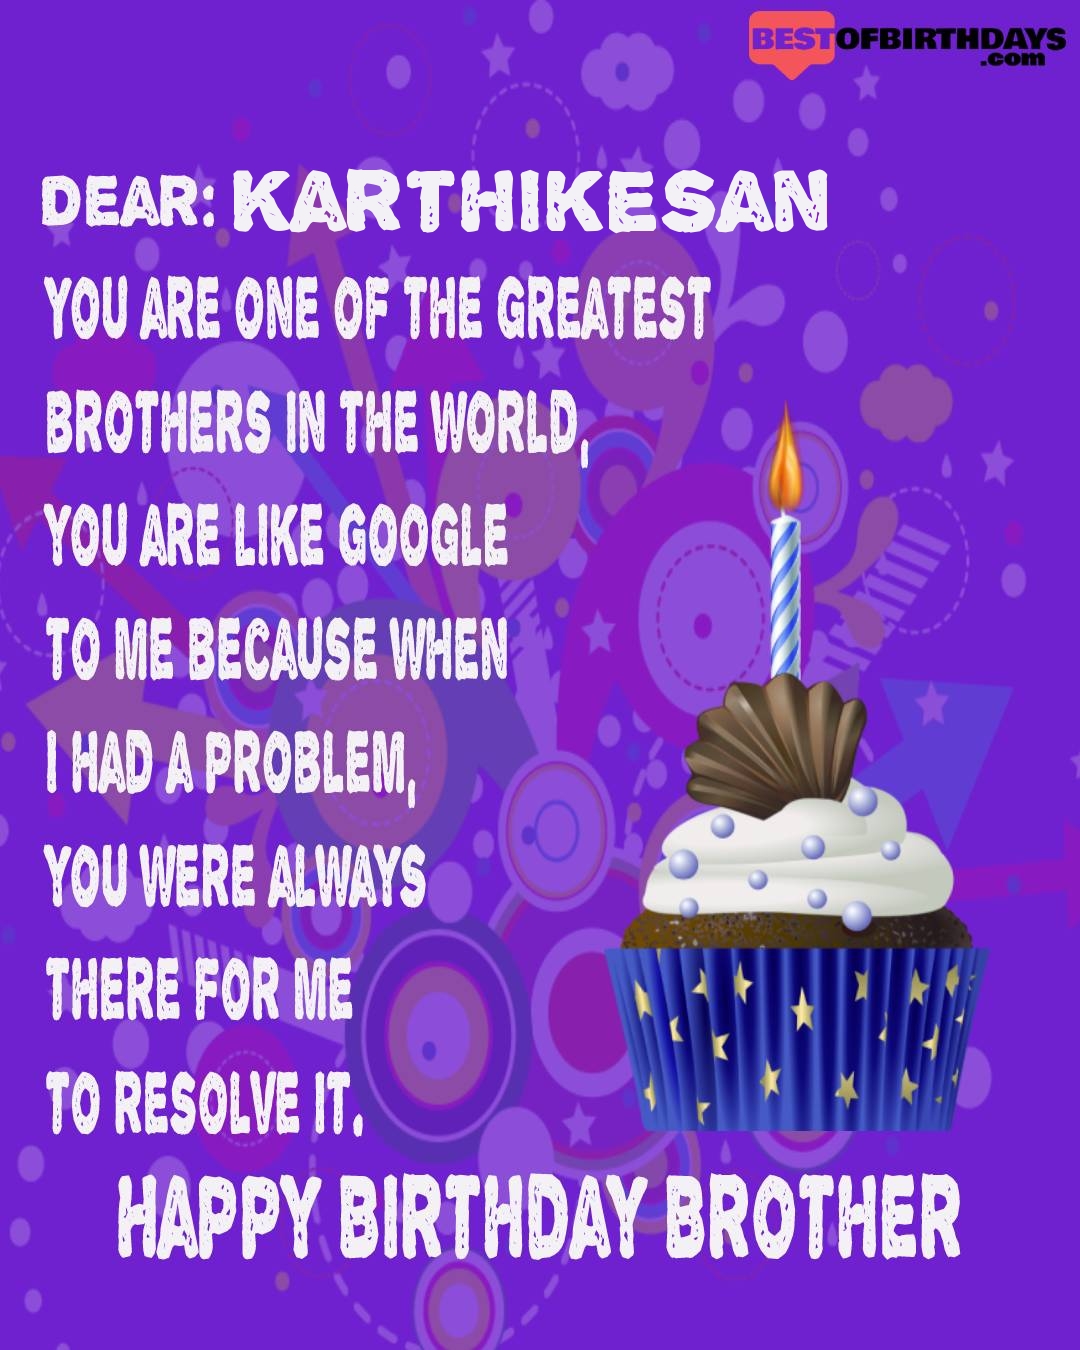 Happy birthday karthikesan bhai brother bro